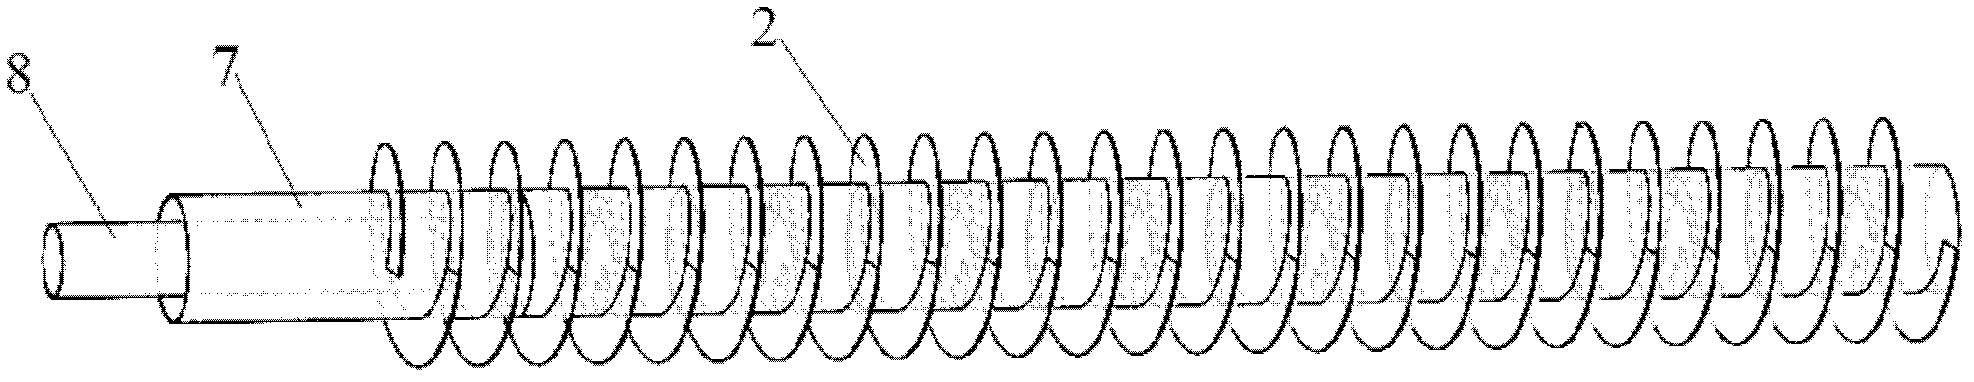 Spiral flow whirlwind gas separator